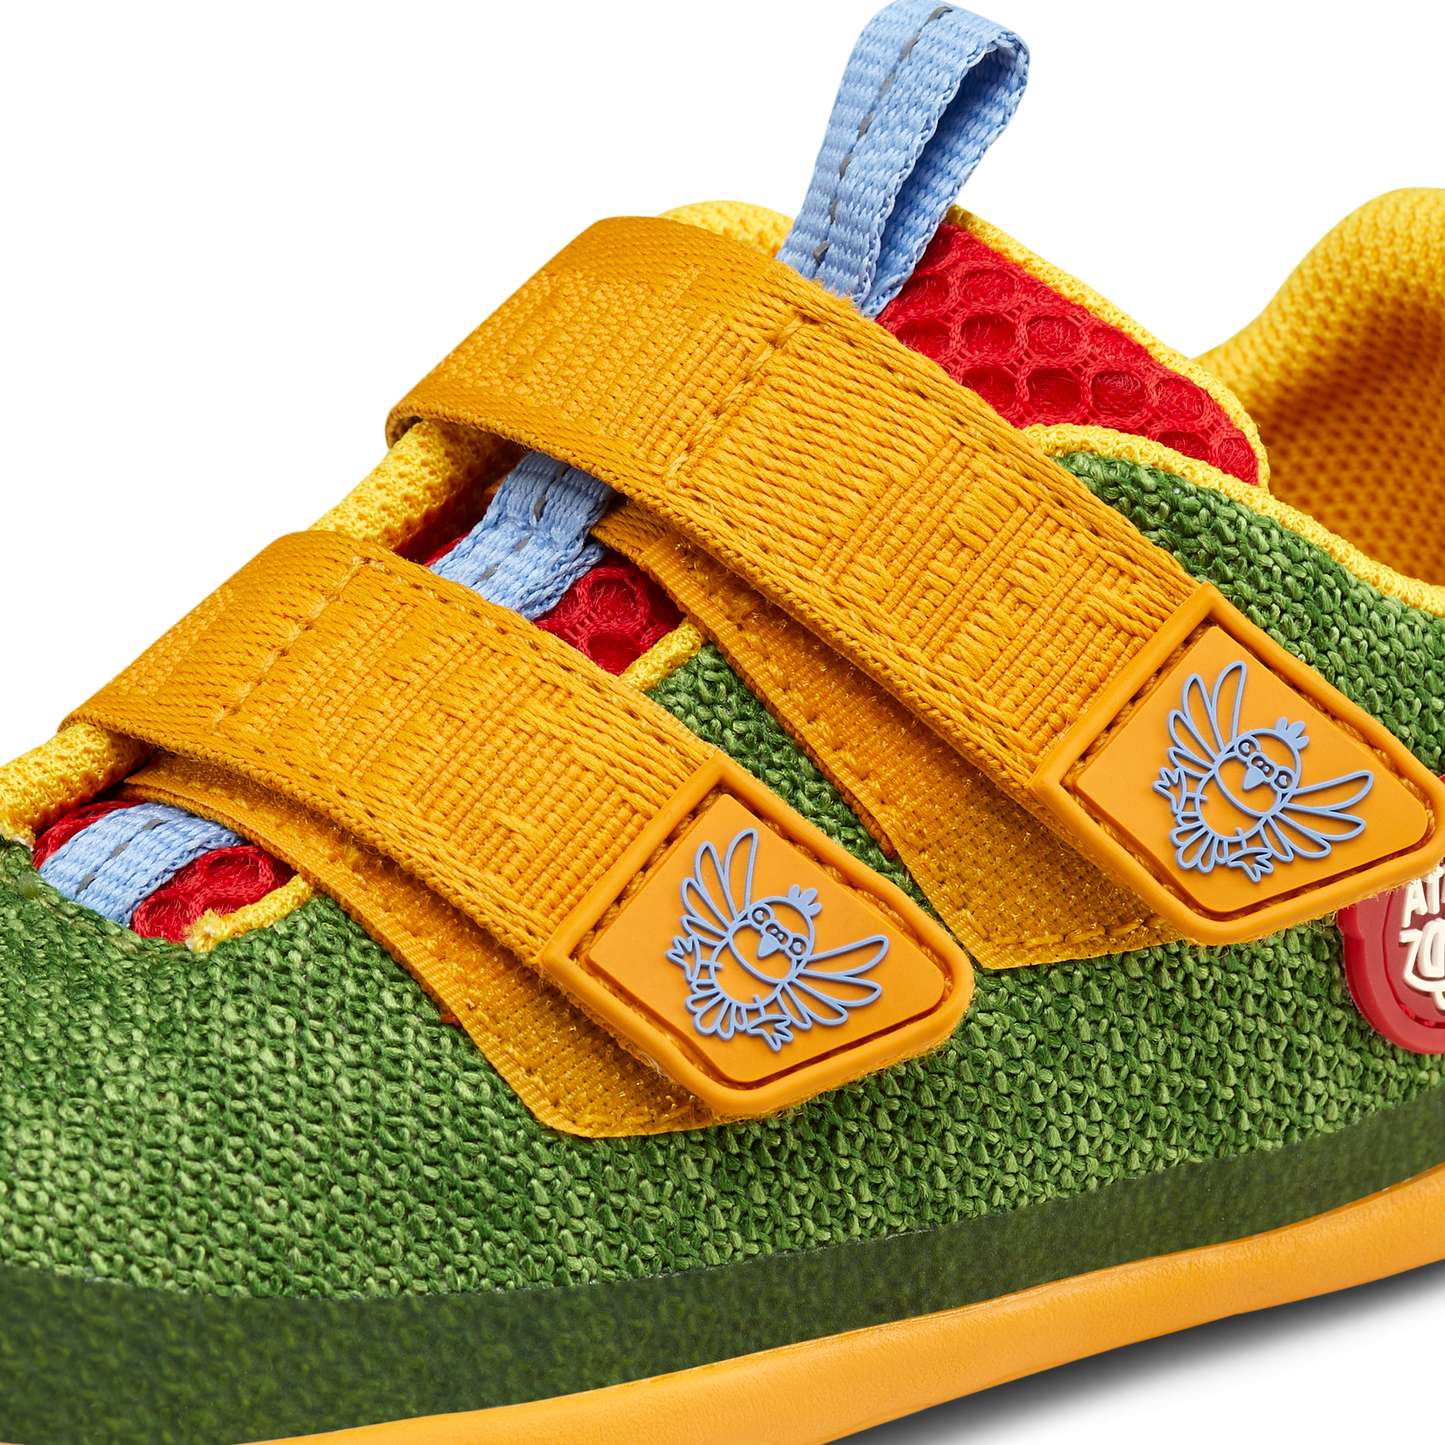 Affenzahn Knit Happy barfods sneakers til børn i farven bird of paradise, detalje